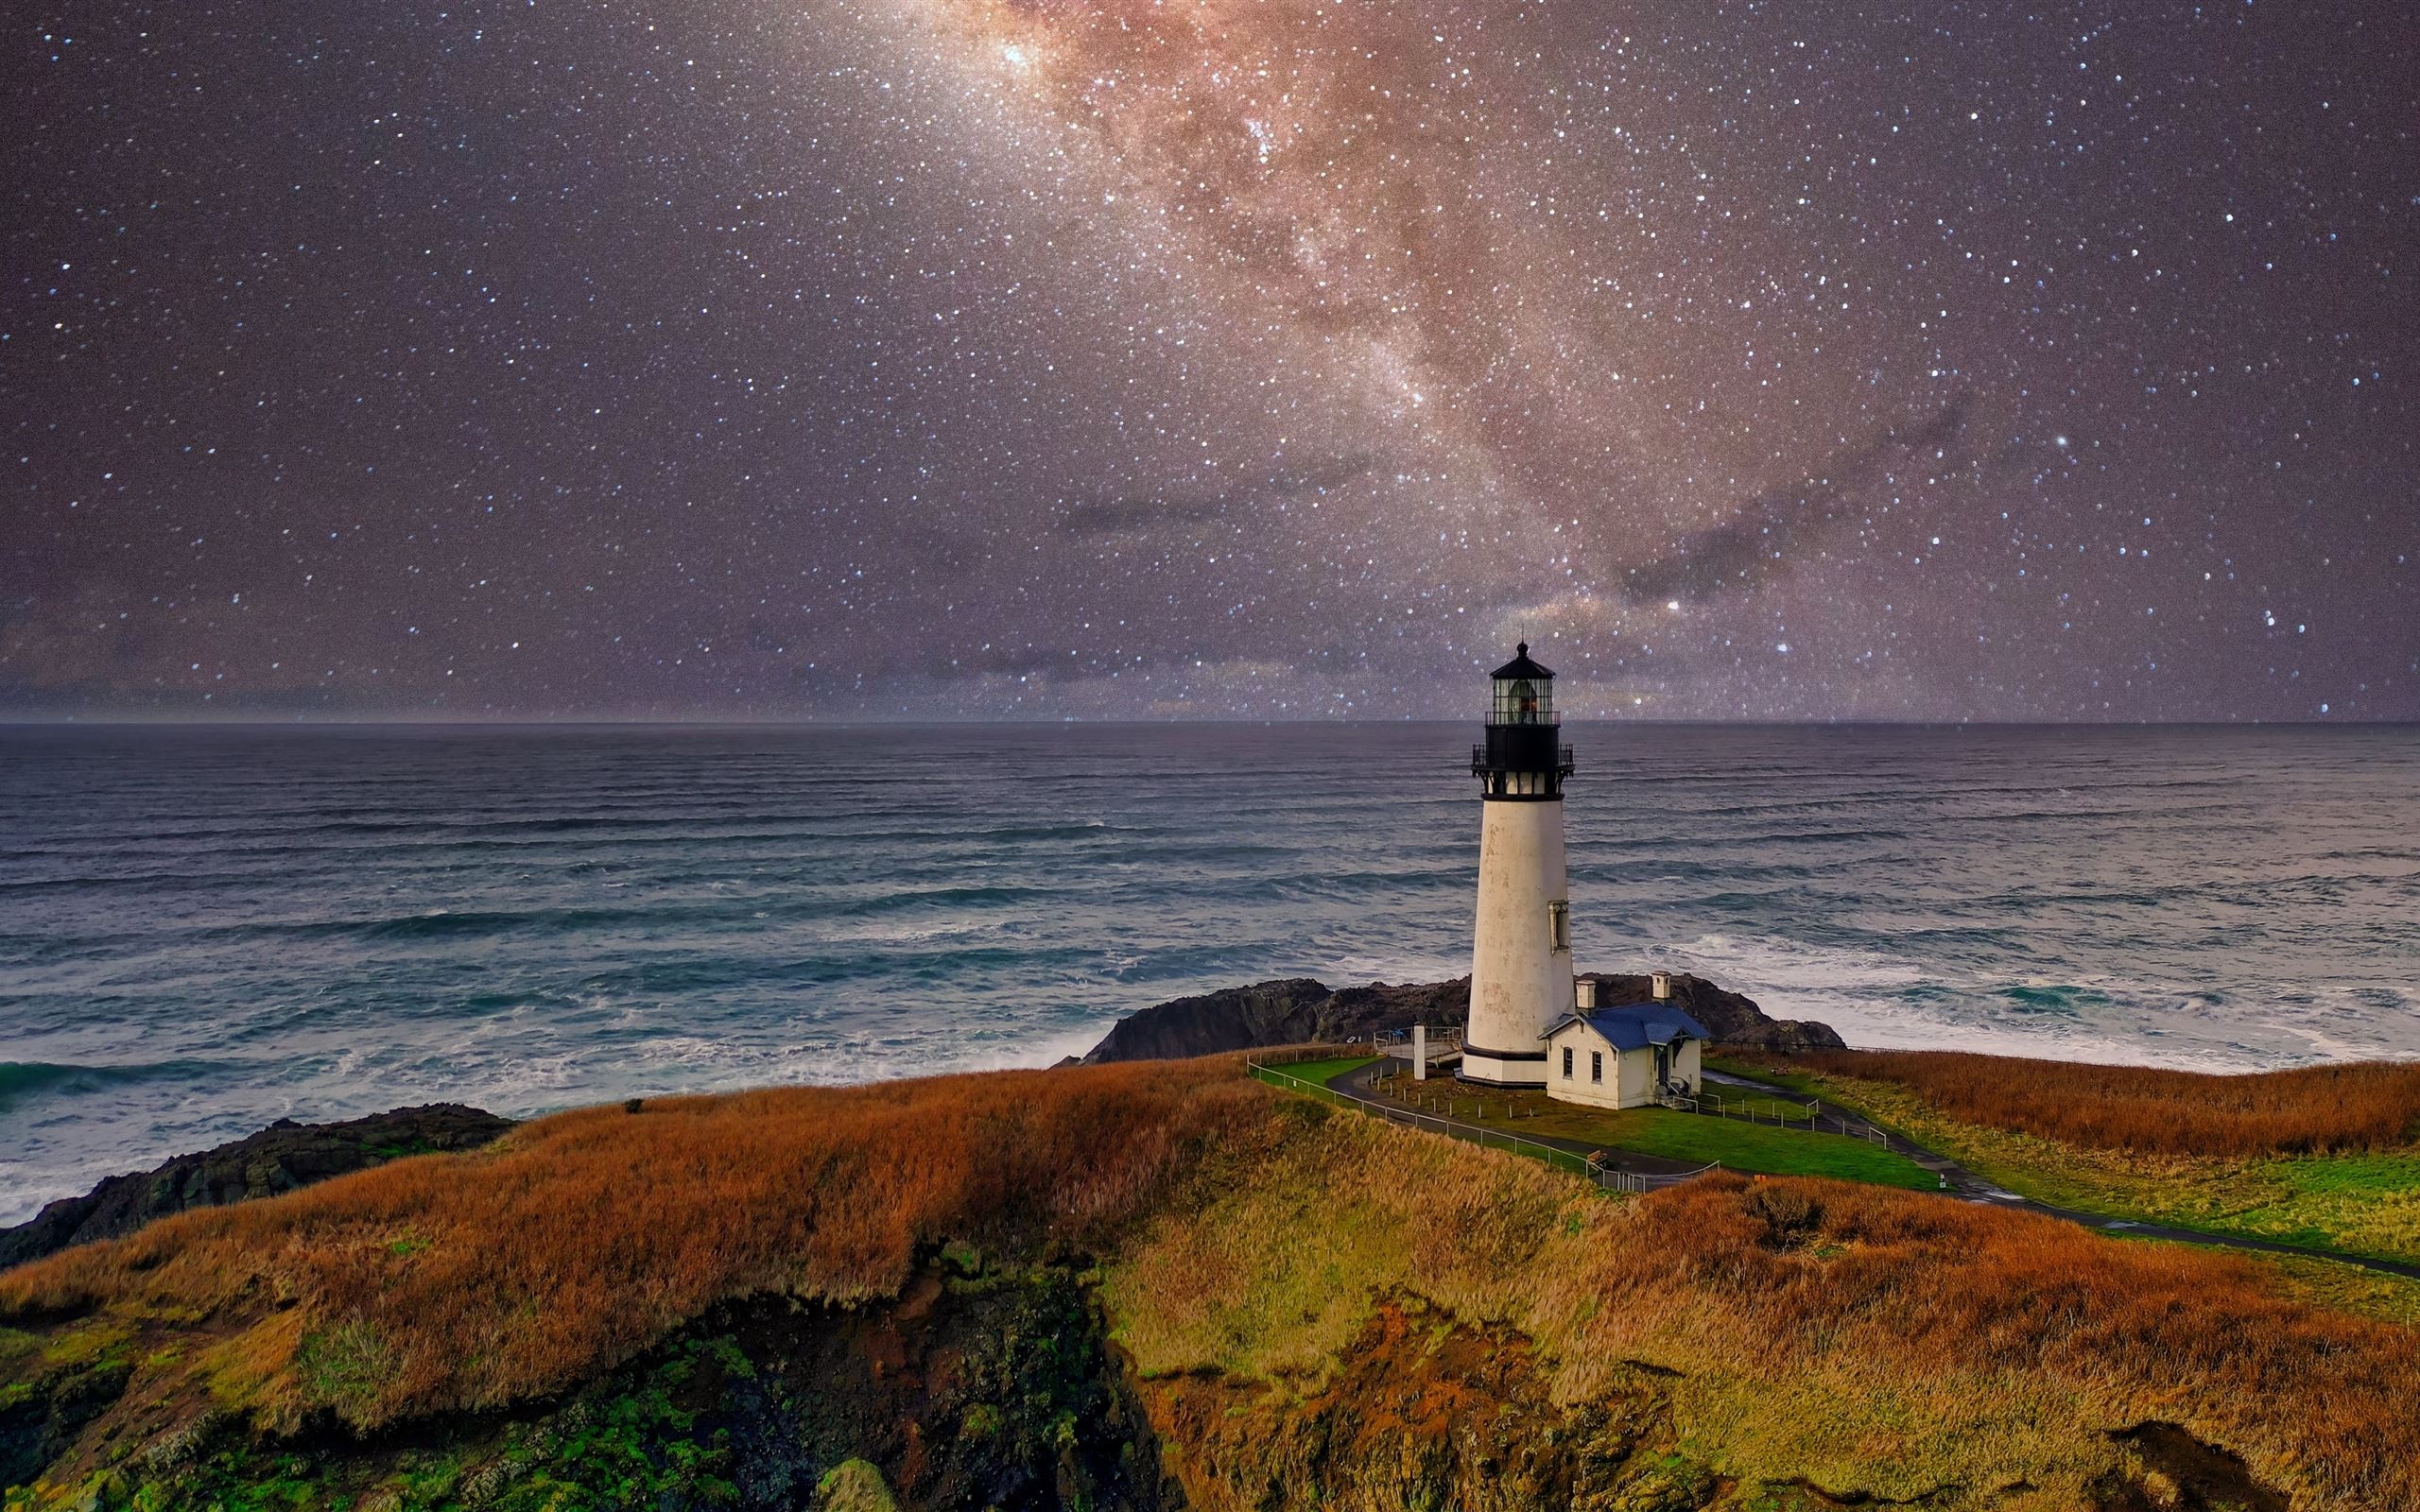 Starry night, Lighthouse silhouette, Nighttime charm, MacBook Pro wallpaper, 2560x1600 HD Desktop